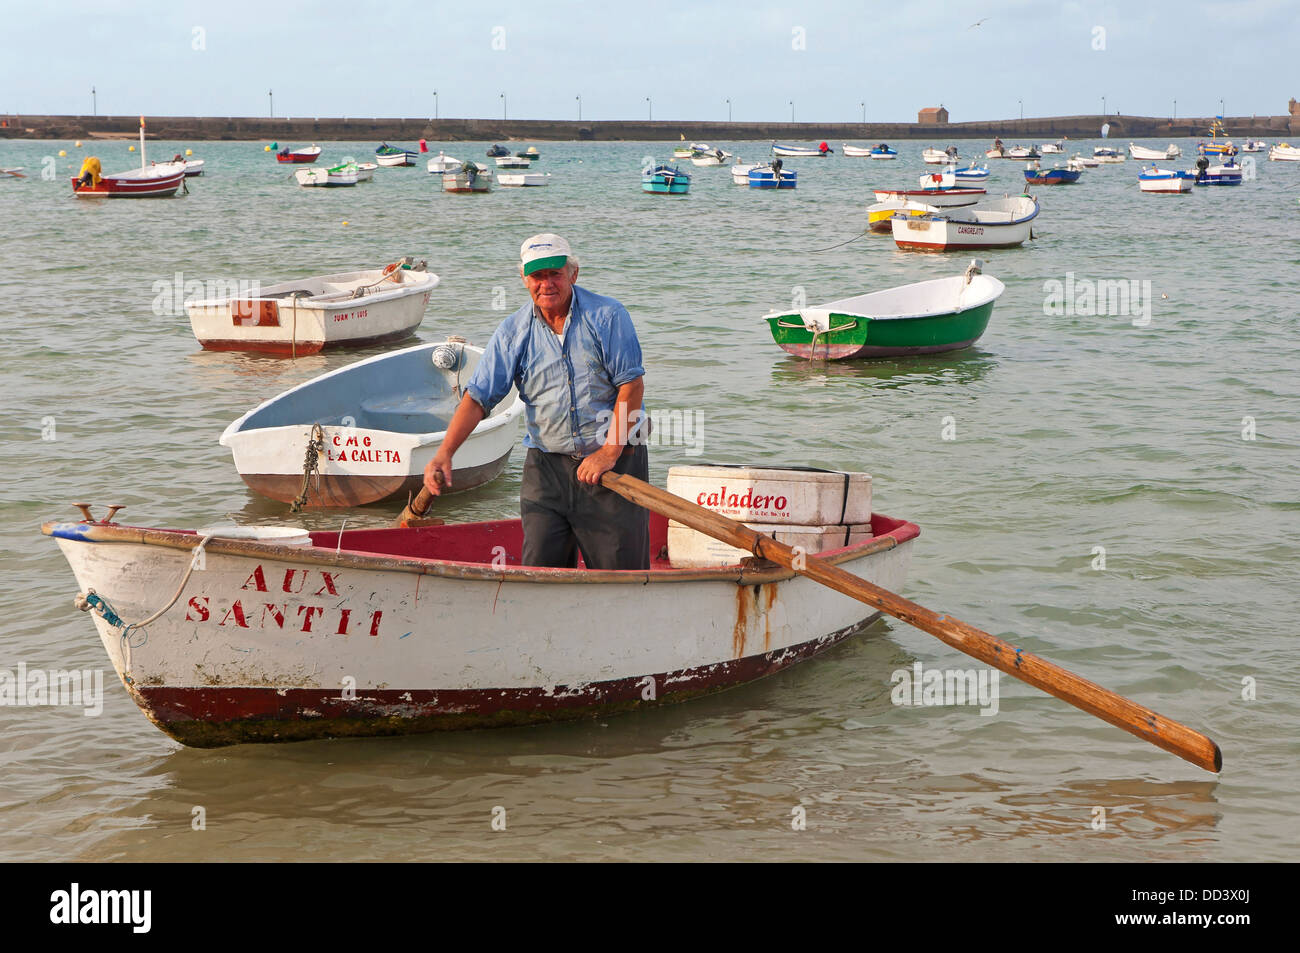 Fisherman in rowboat, La Caleta Beach, Cadiz, Region of Andalusia, Spain, Europe Stock Photo